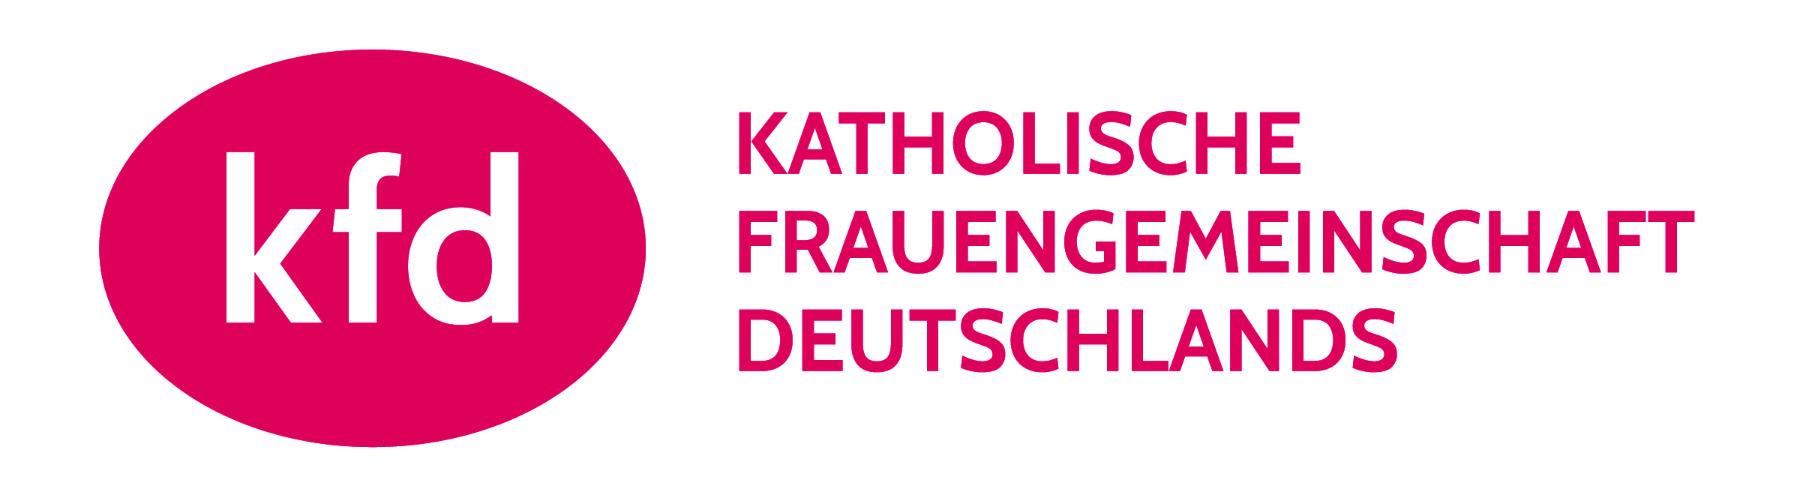 kfd_Logo_Purpur_sRGB (c) kfd Deutschland